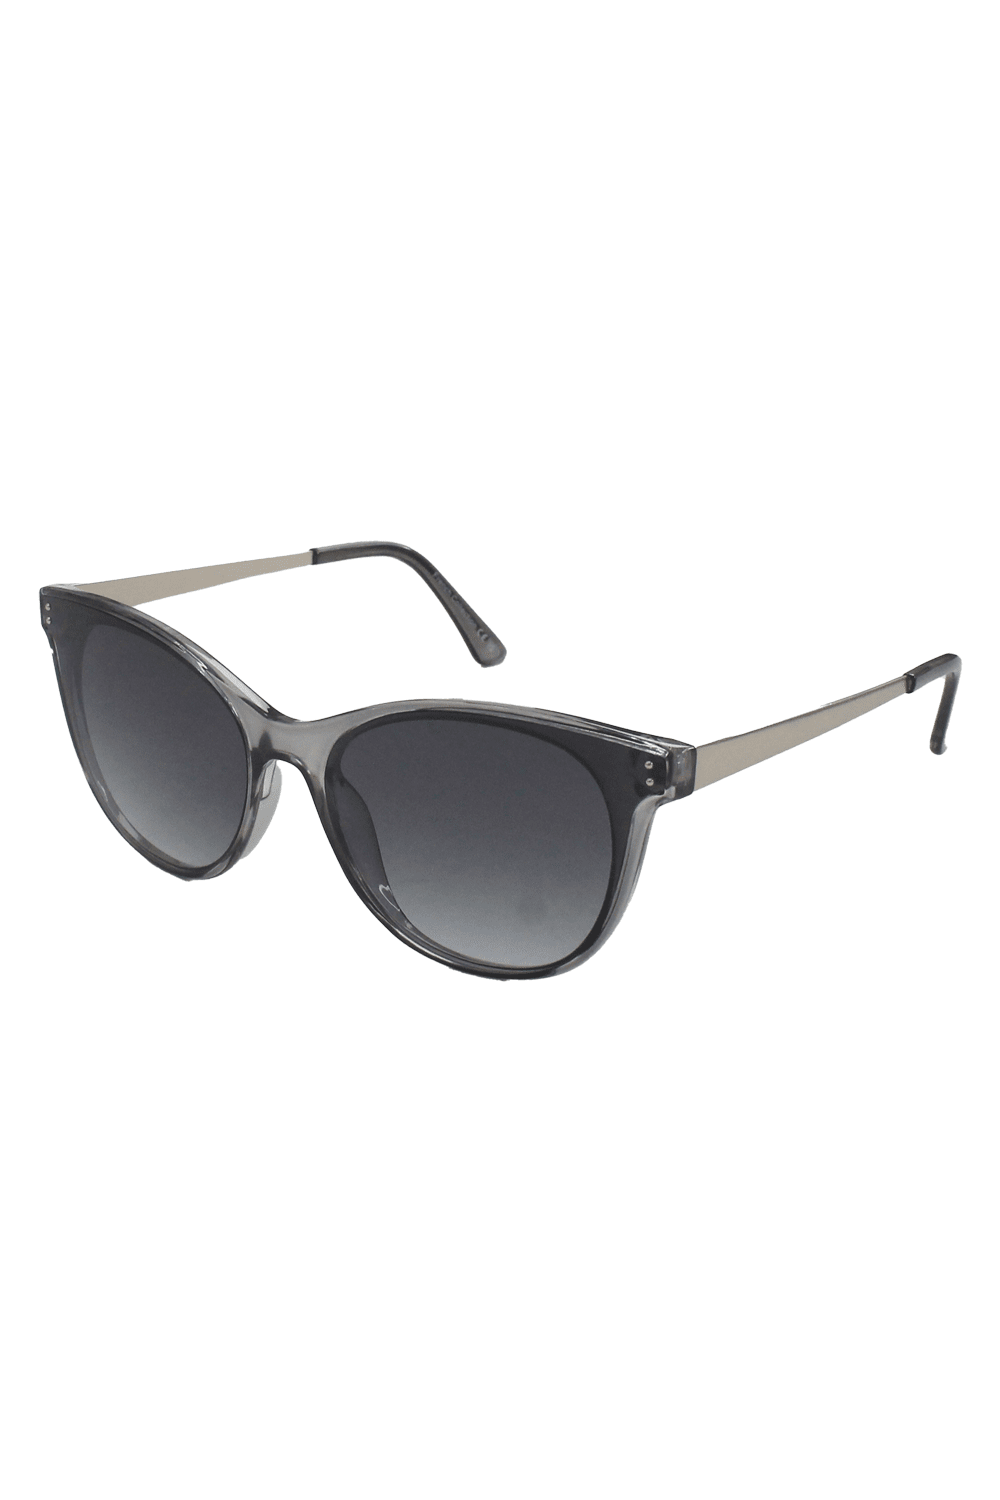 Jovanna Sunglasses Grey sunglasses